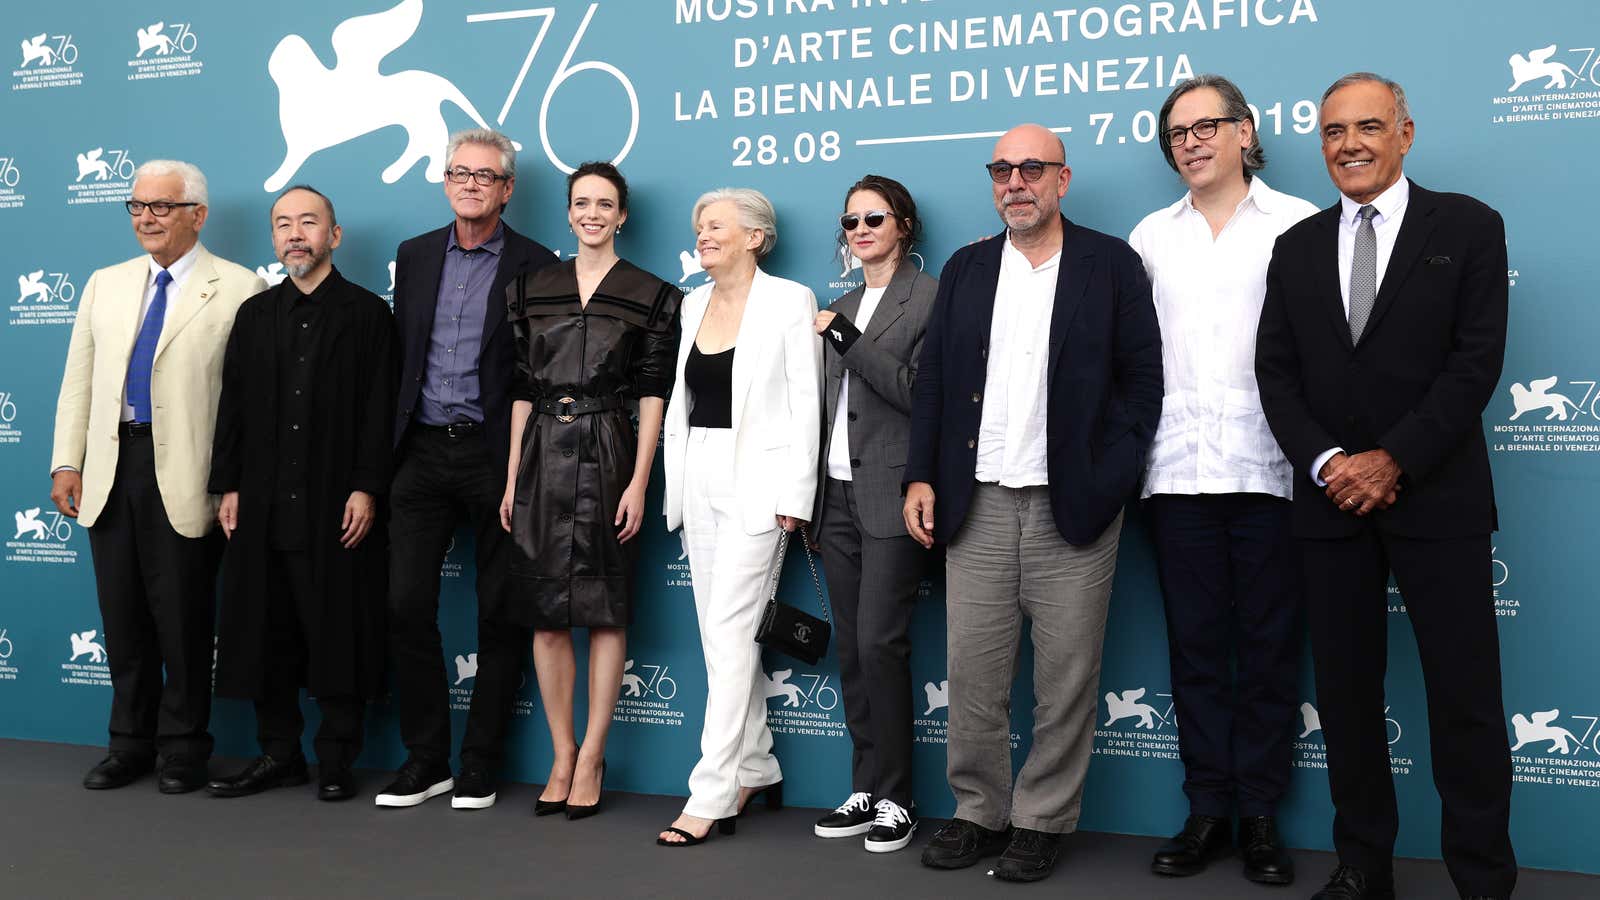 Women are underrepresented at the Venice International Film Festival.